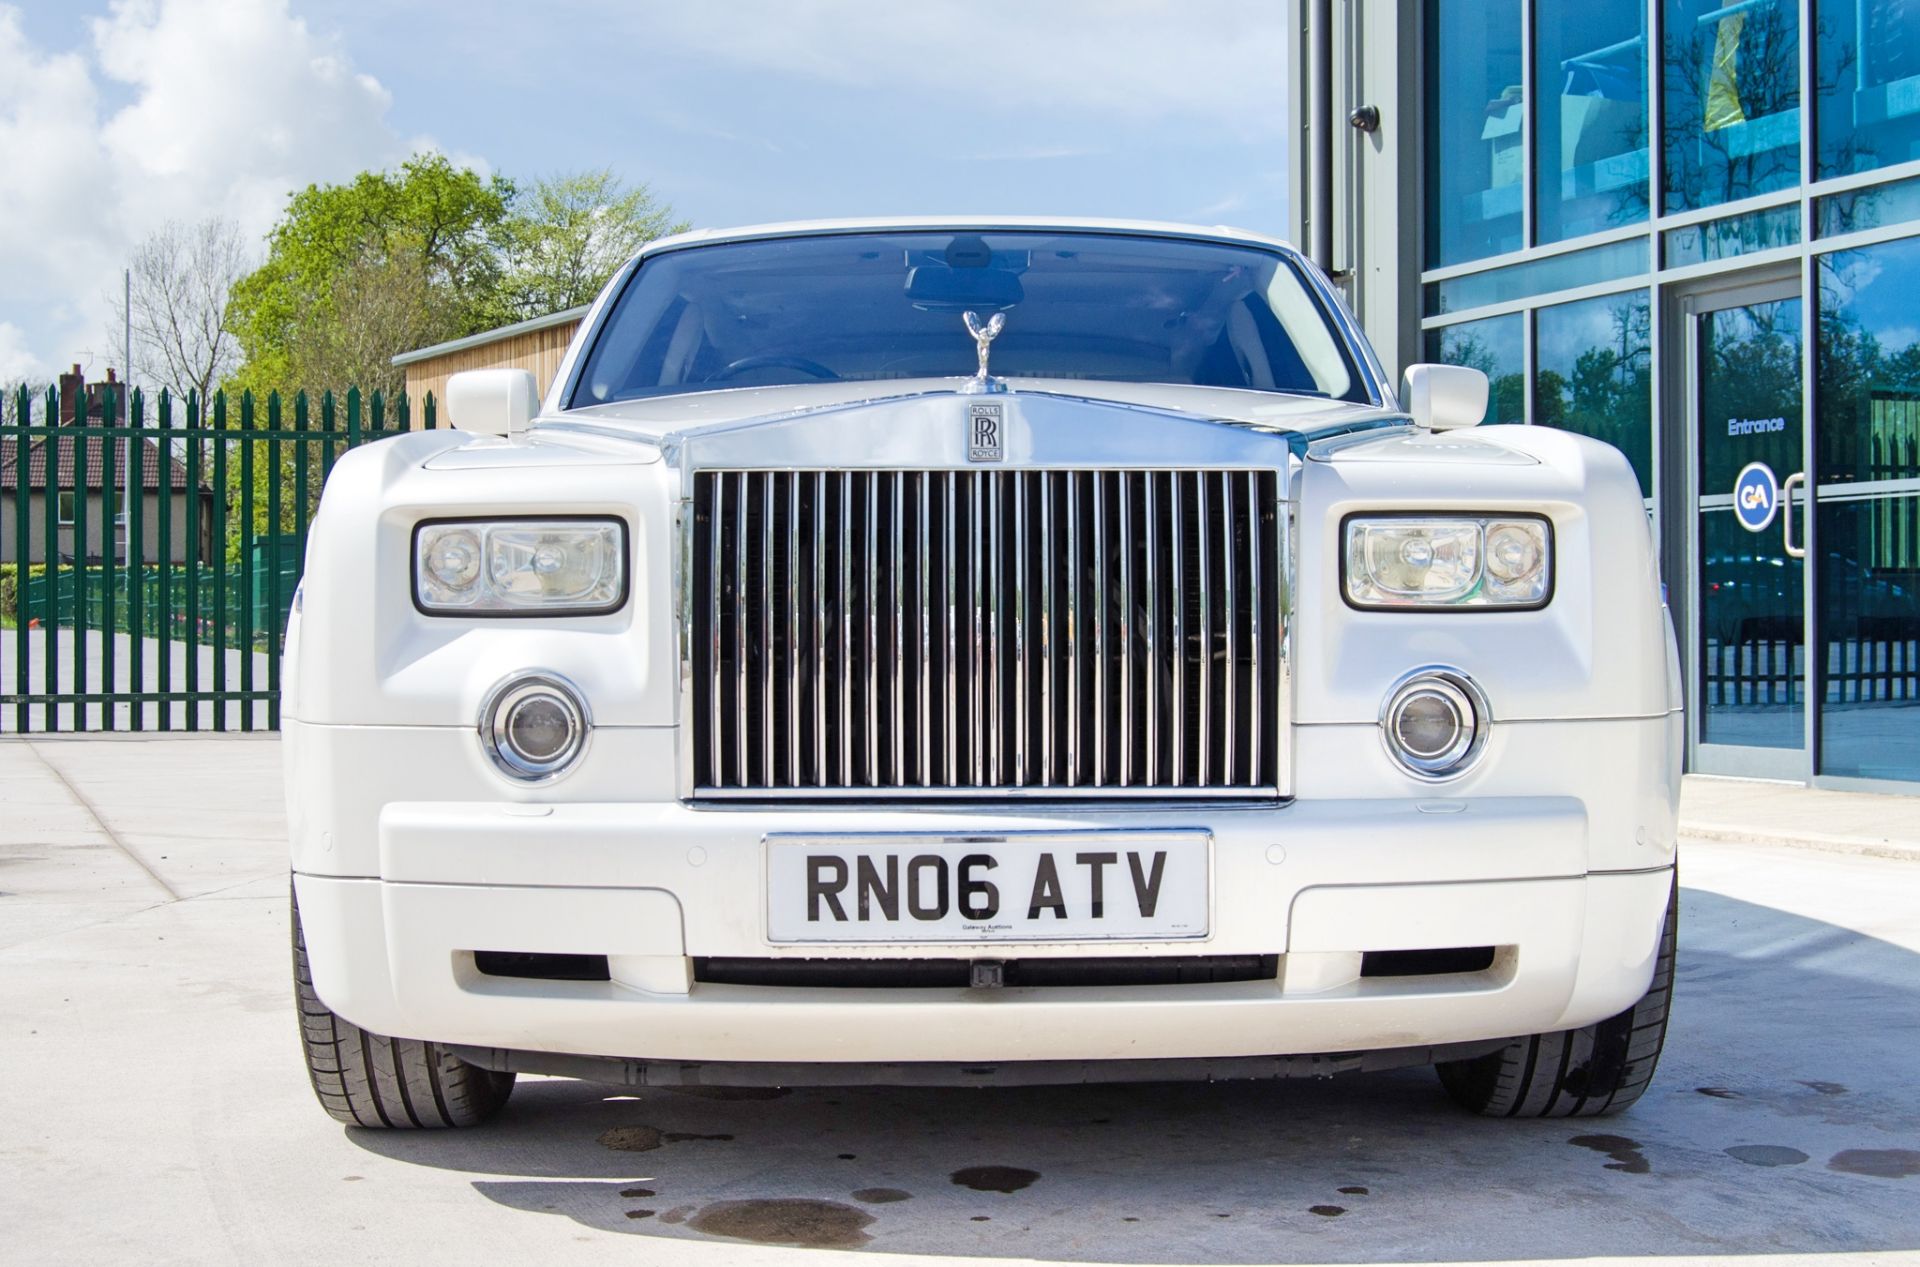 2006 Rolls Royce Phantom 6749cc V12 Auto 4 door saloon car PLUS VAT - Image 9 of 52